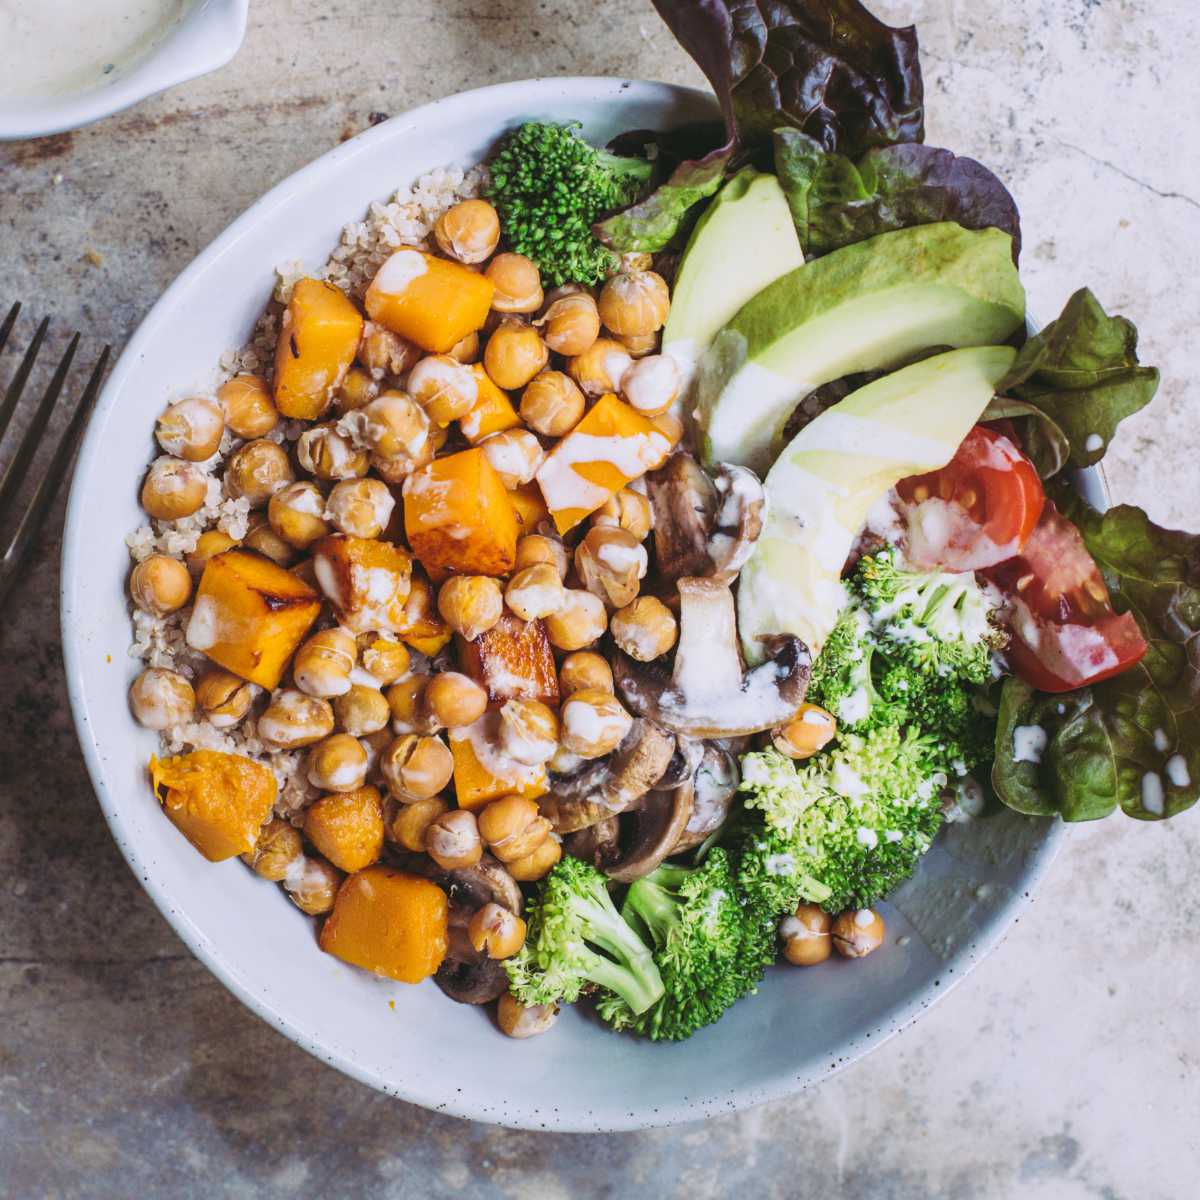 vegan protein bowl with chickpeas, quinoa, veggies and dressing